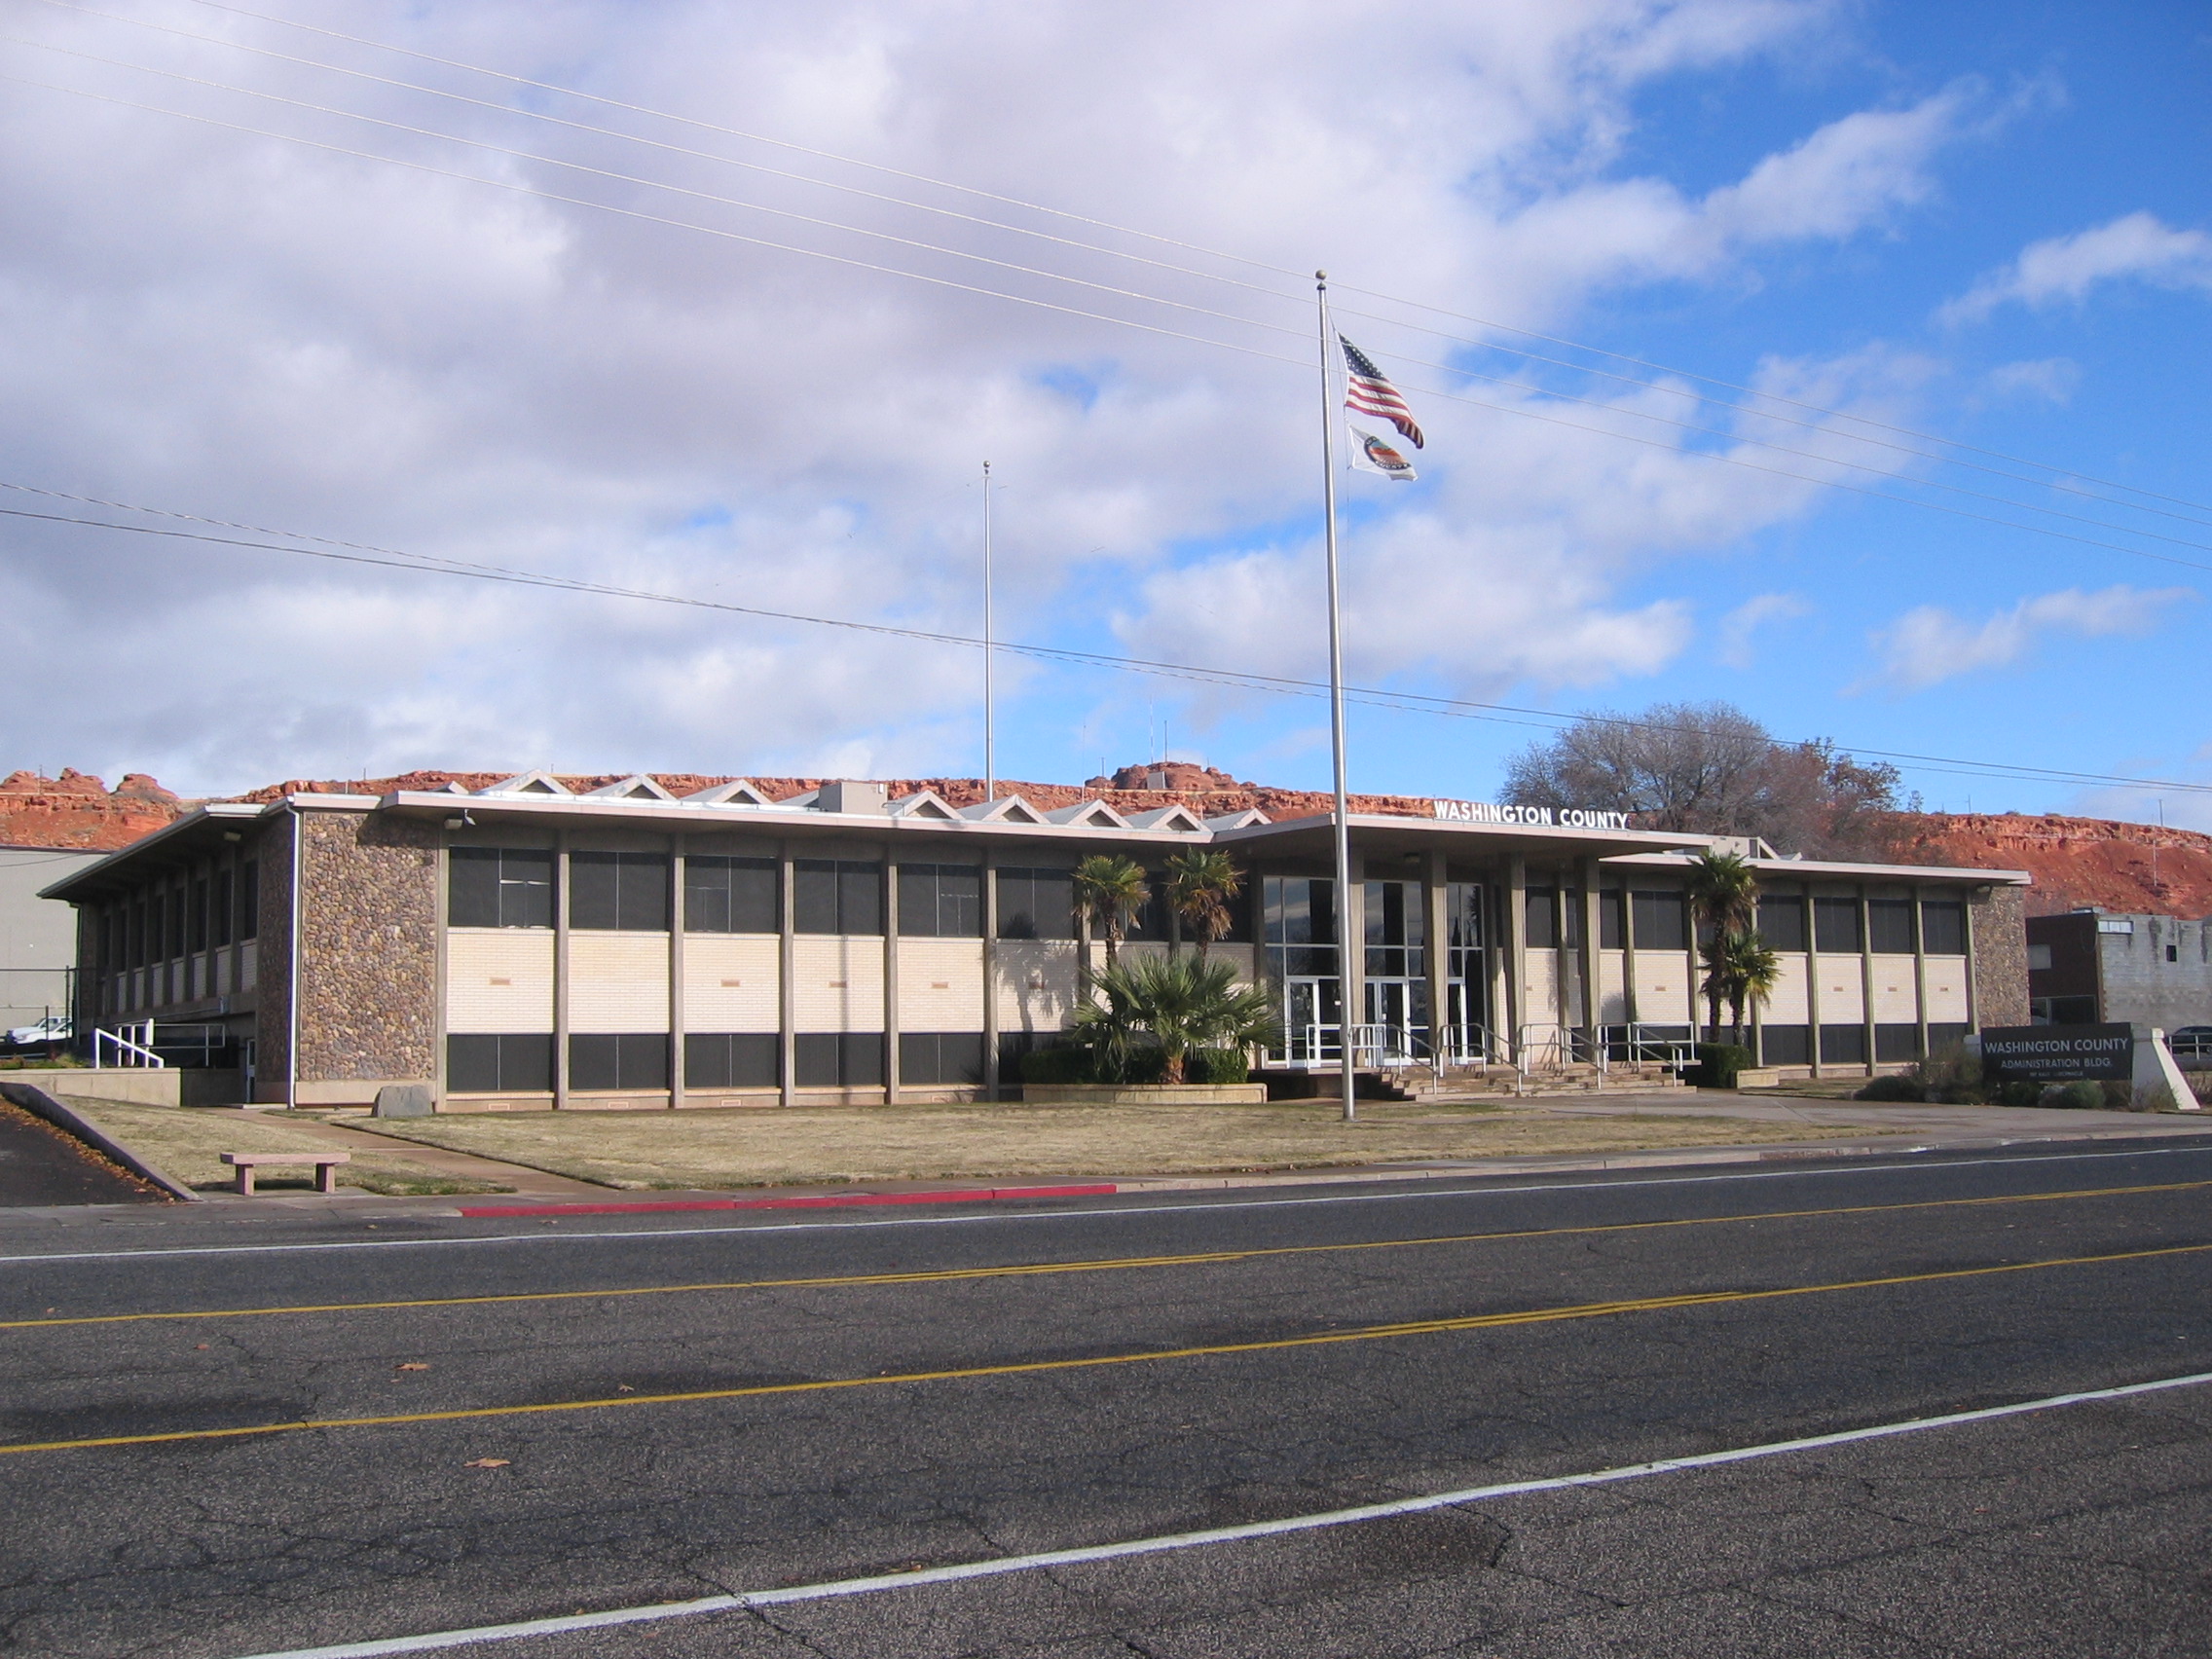 Washington County Administration Building